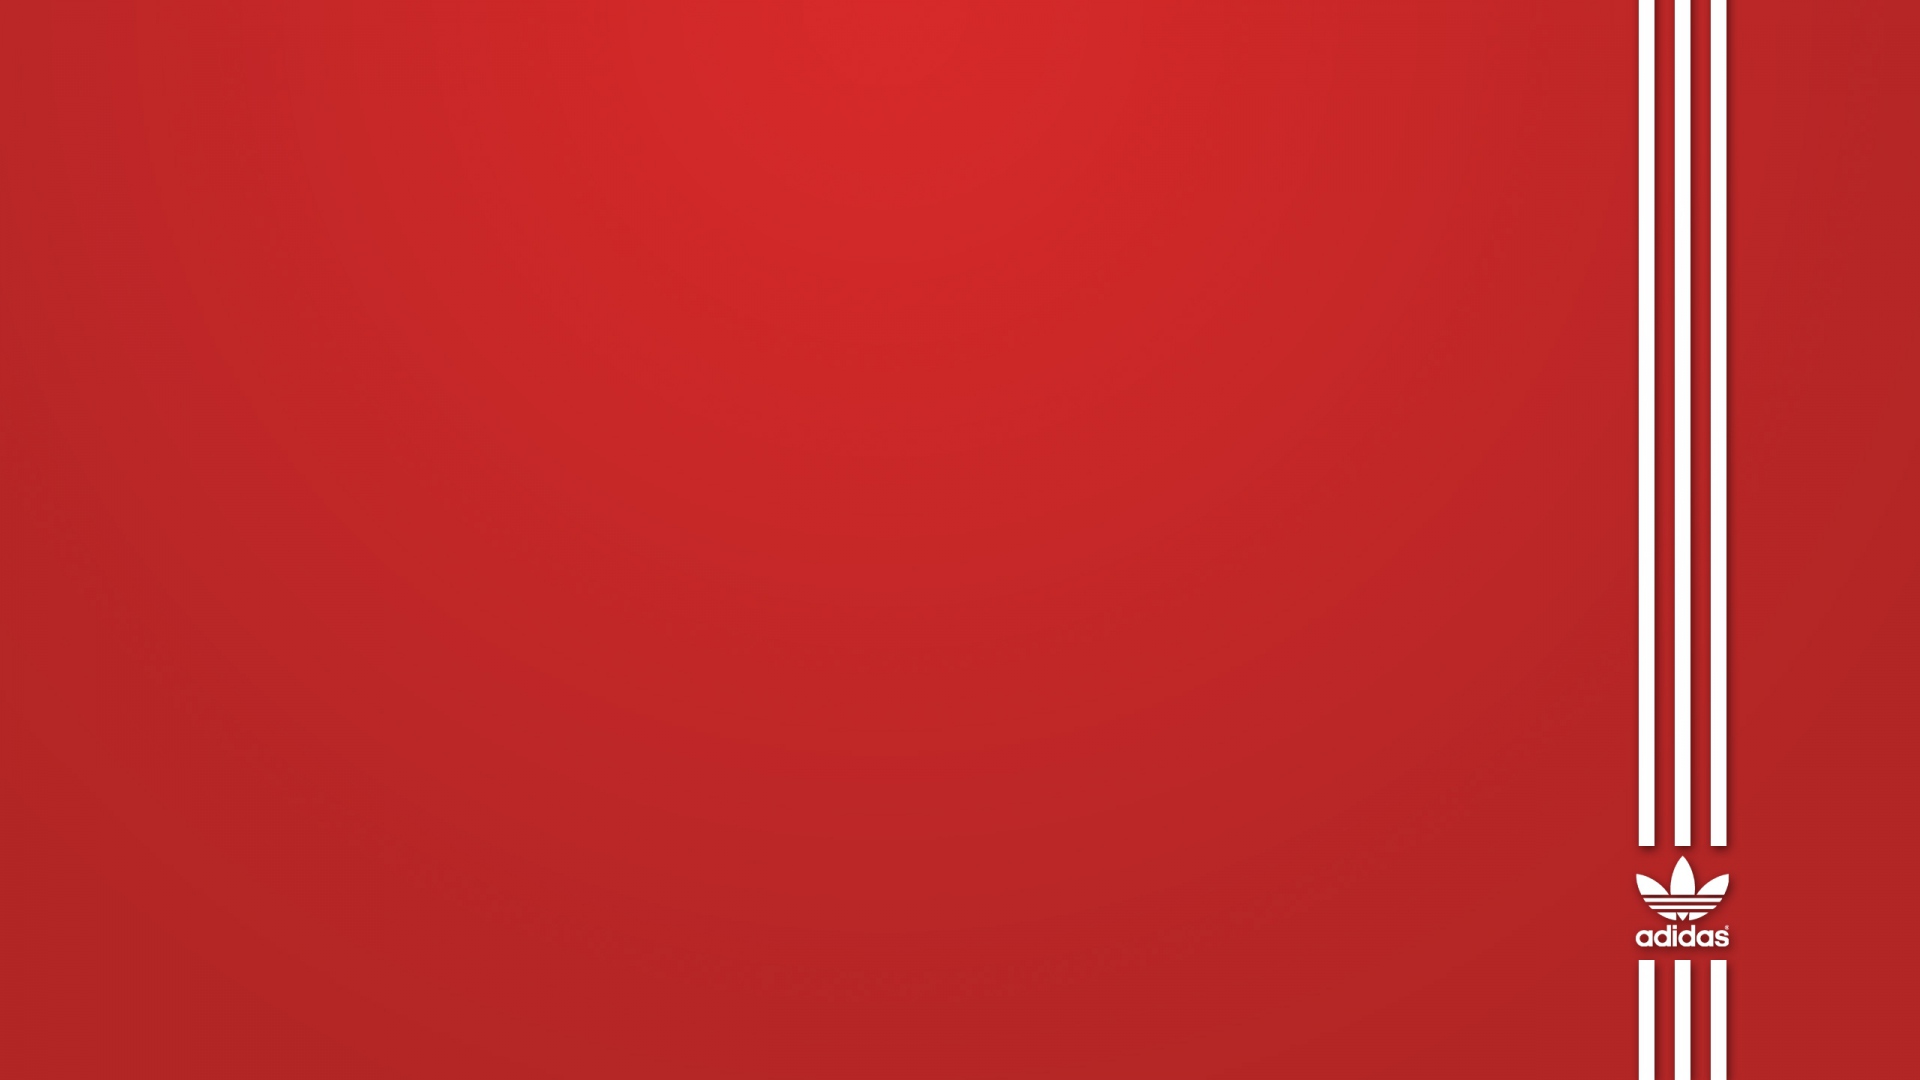 Full HD Wallpaper adidas logo red background, Desktop Backgrounds ...